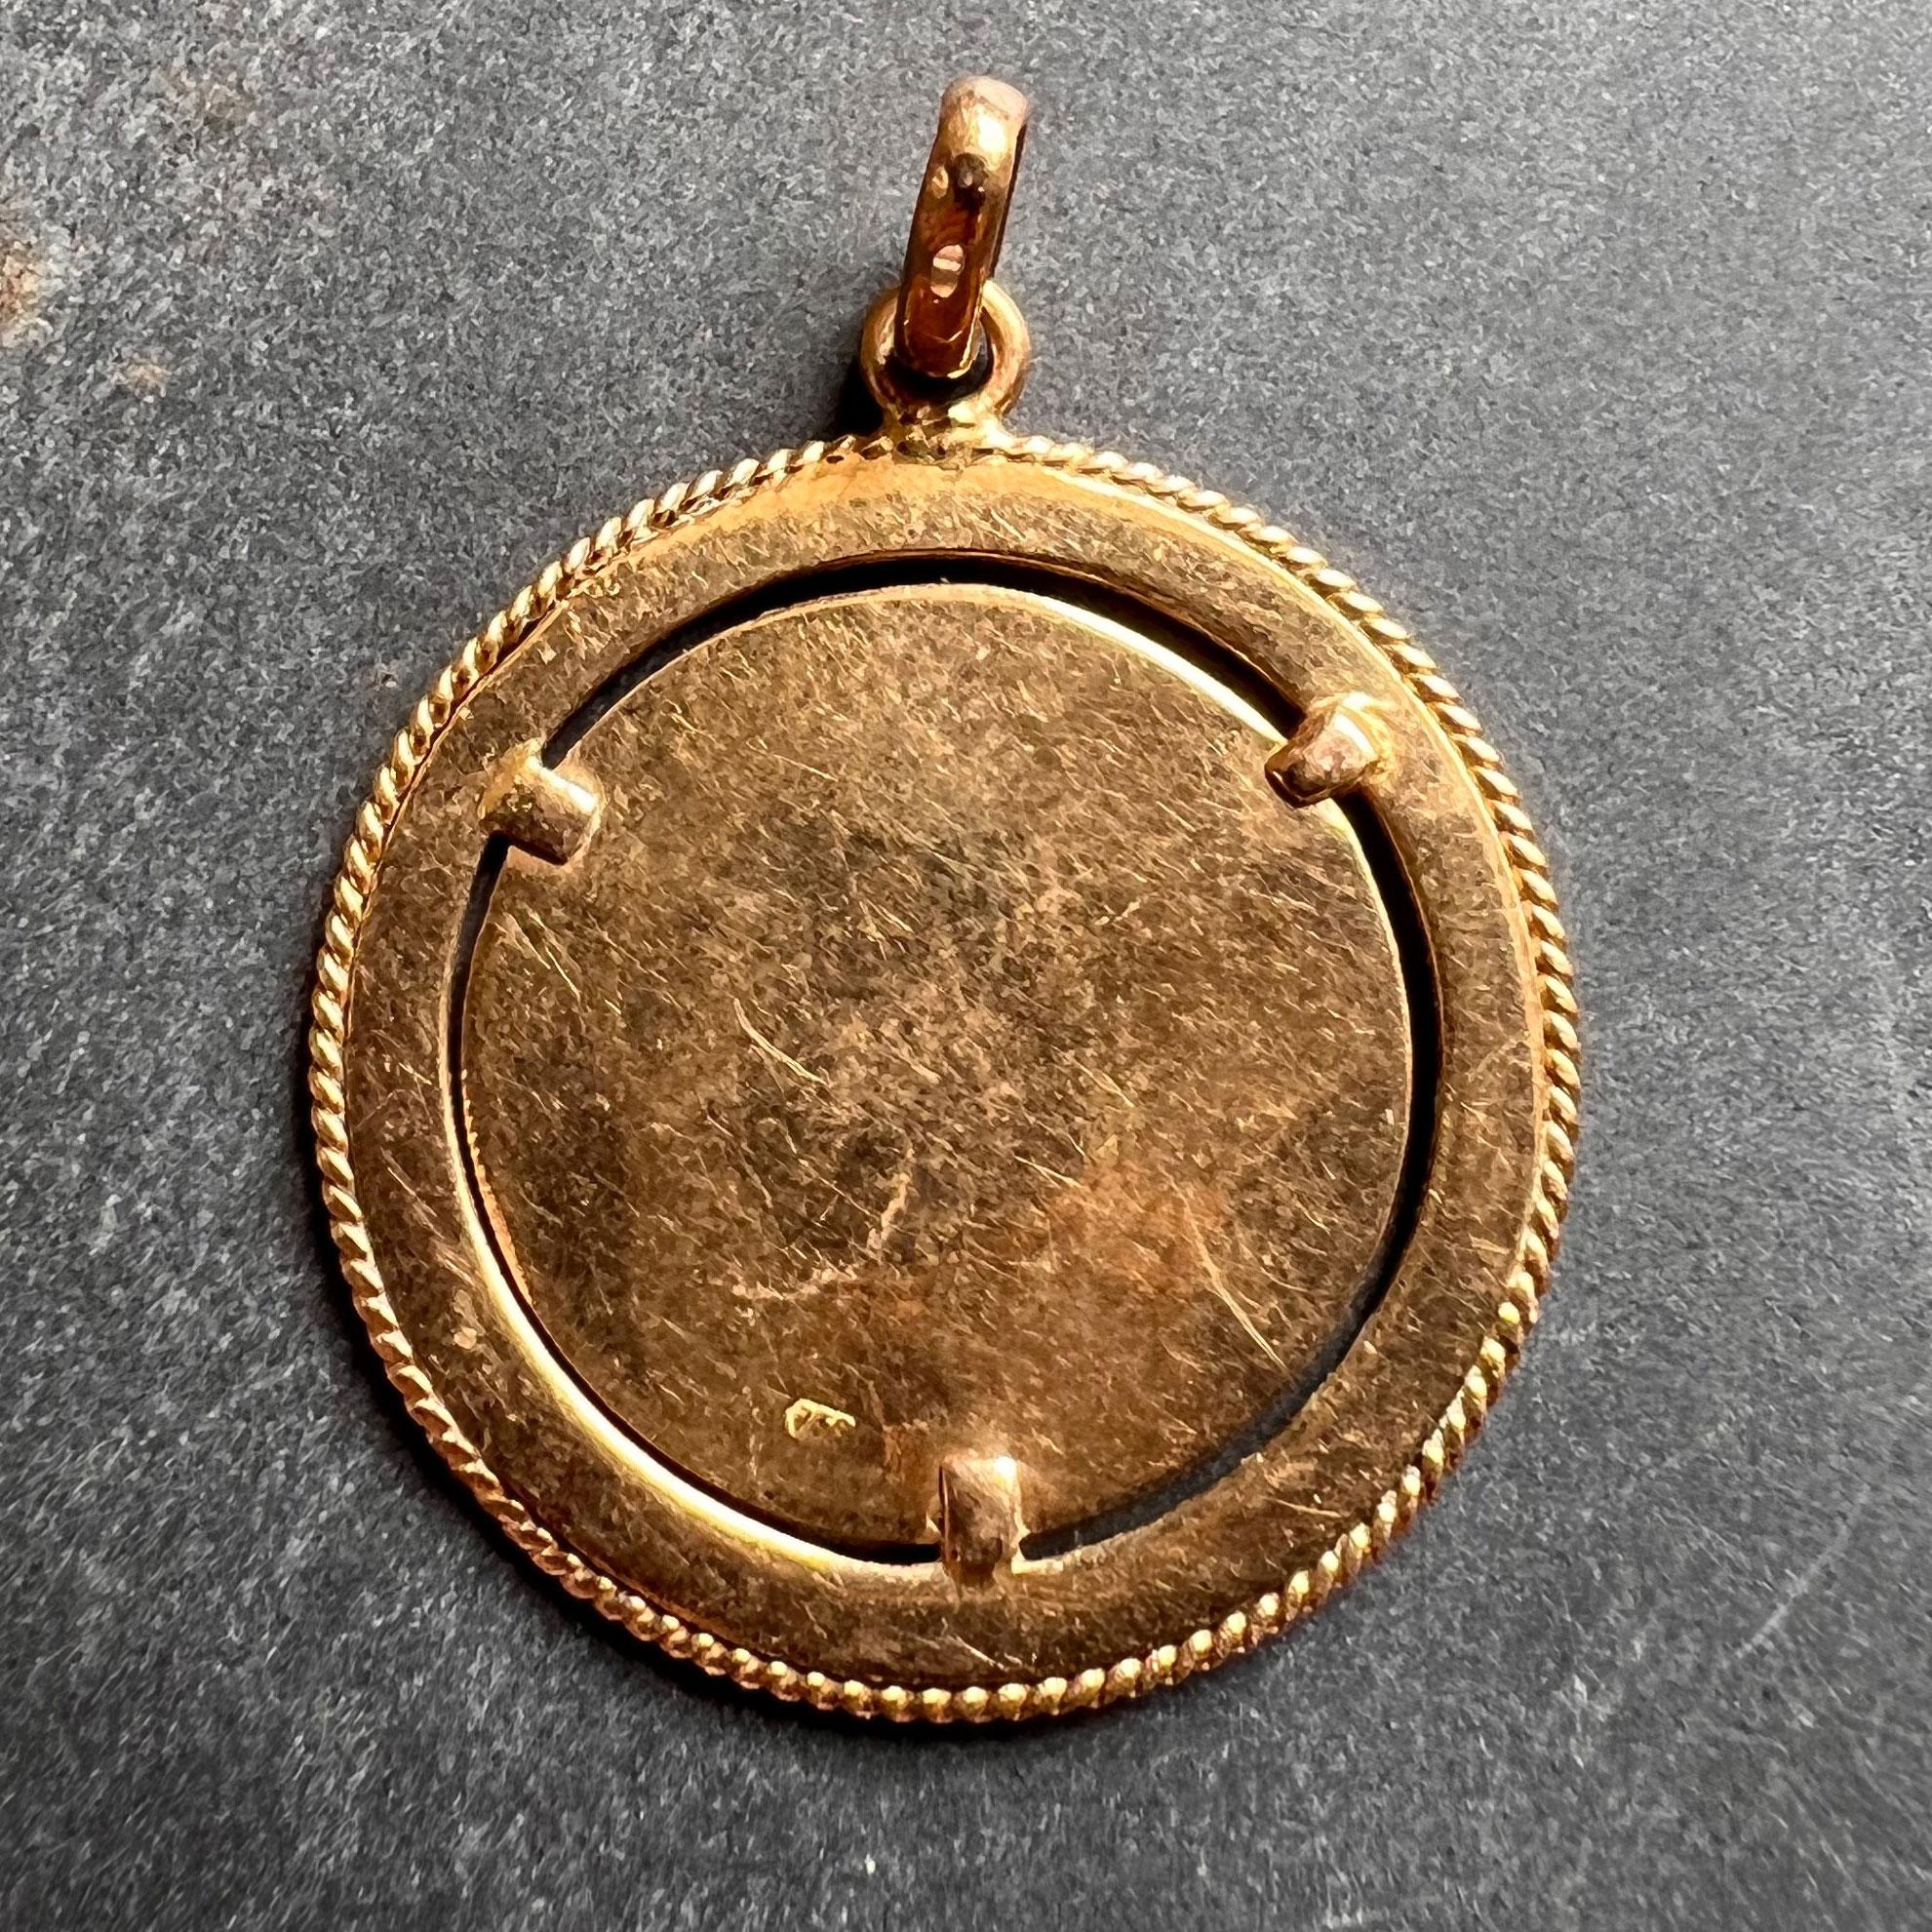 18k gold scorpion pendant